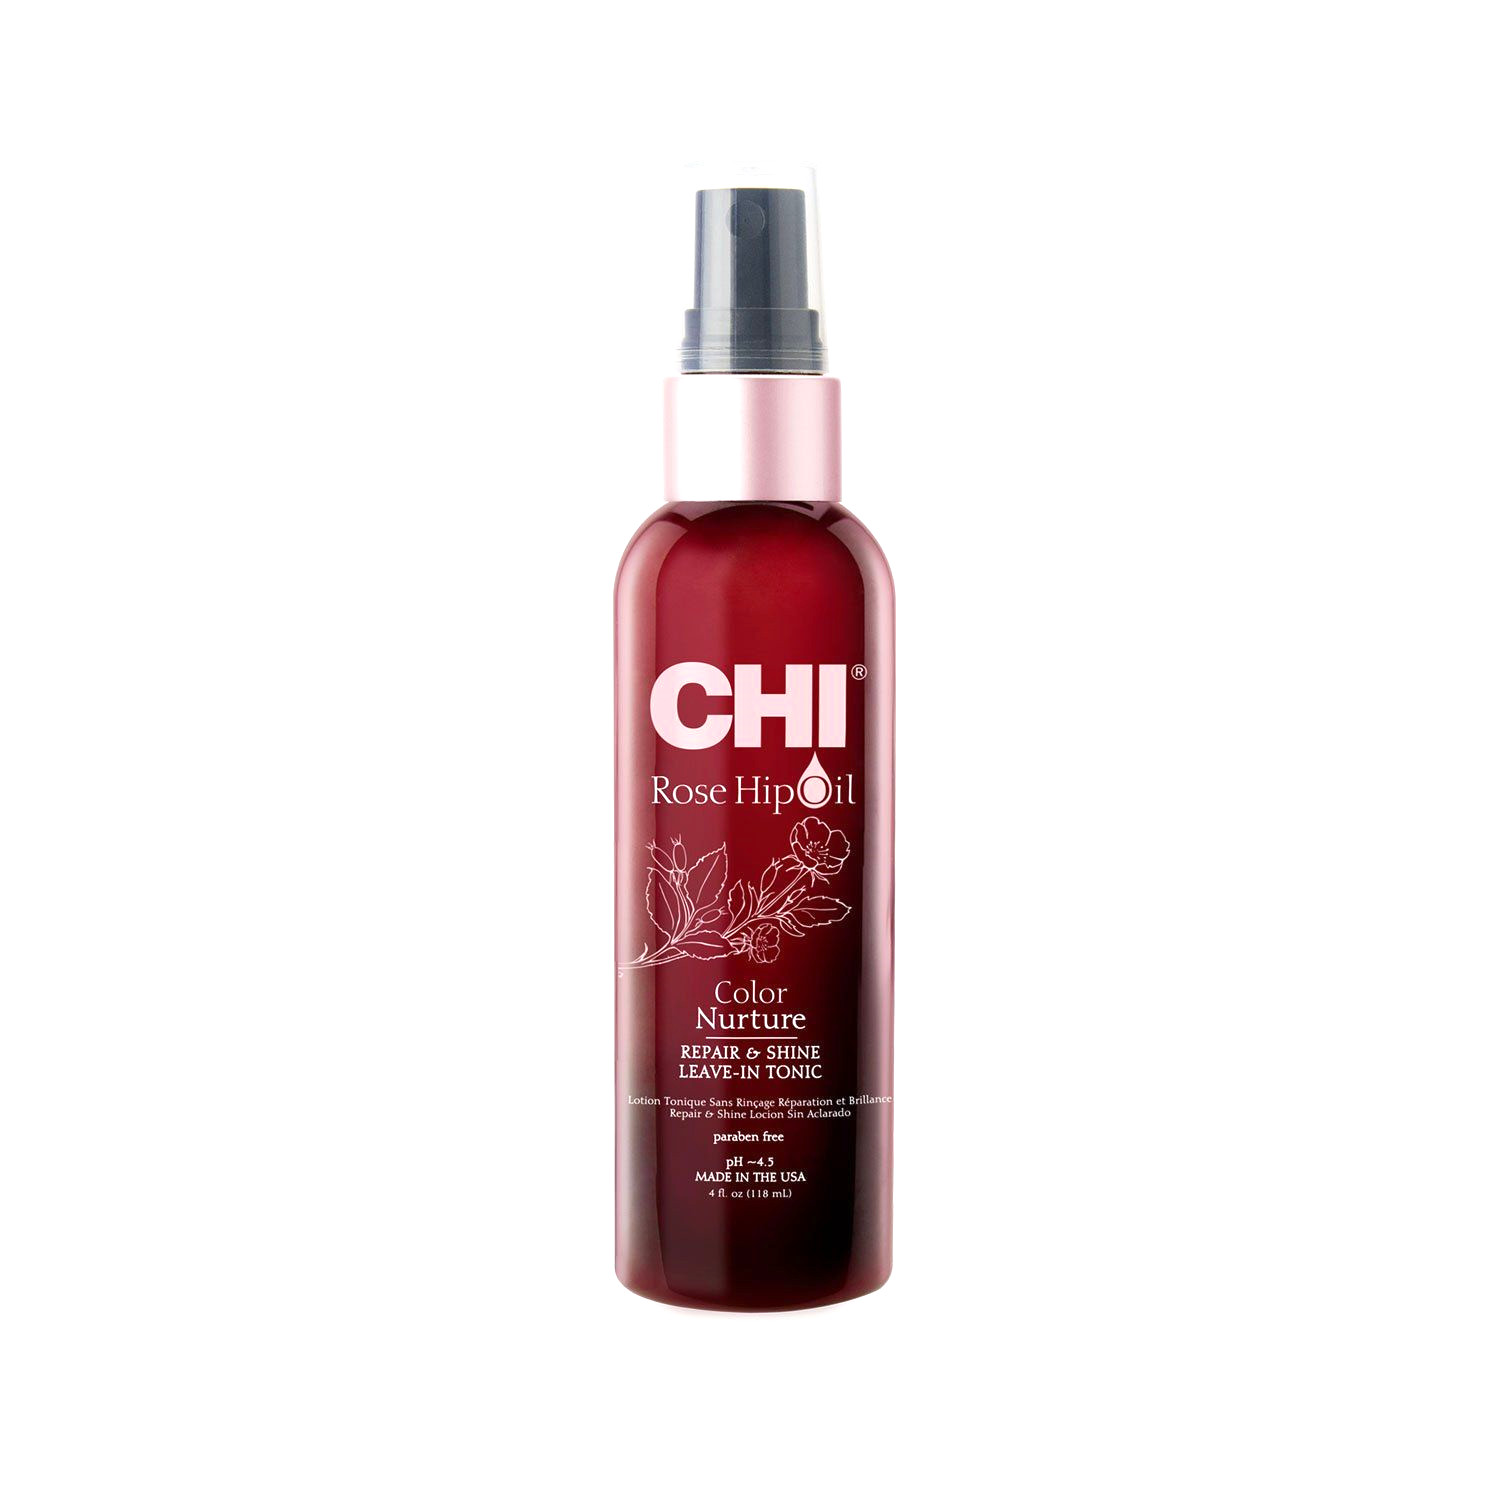 Тоник для волос CHI Rose Hip Oil Repair & Shine Leave-In Tonic 118 мл шампунь для волос biosilk объемная терапия farouk 355мл сша